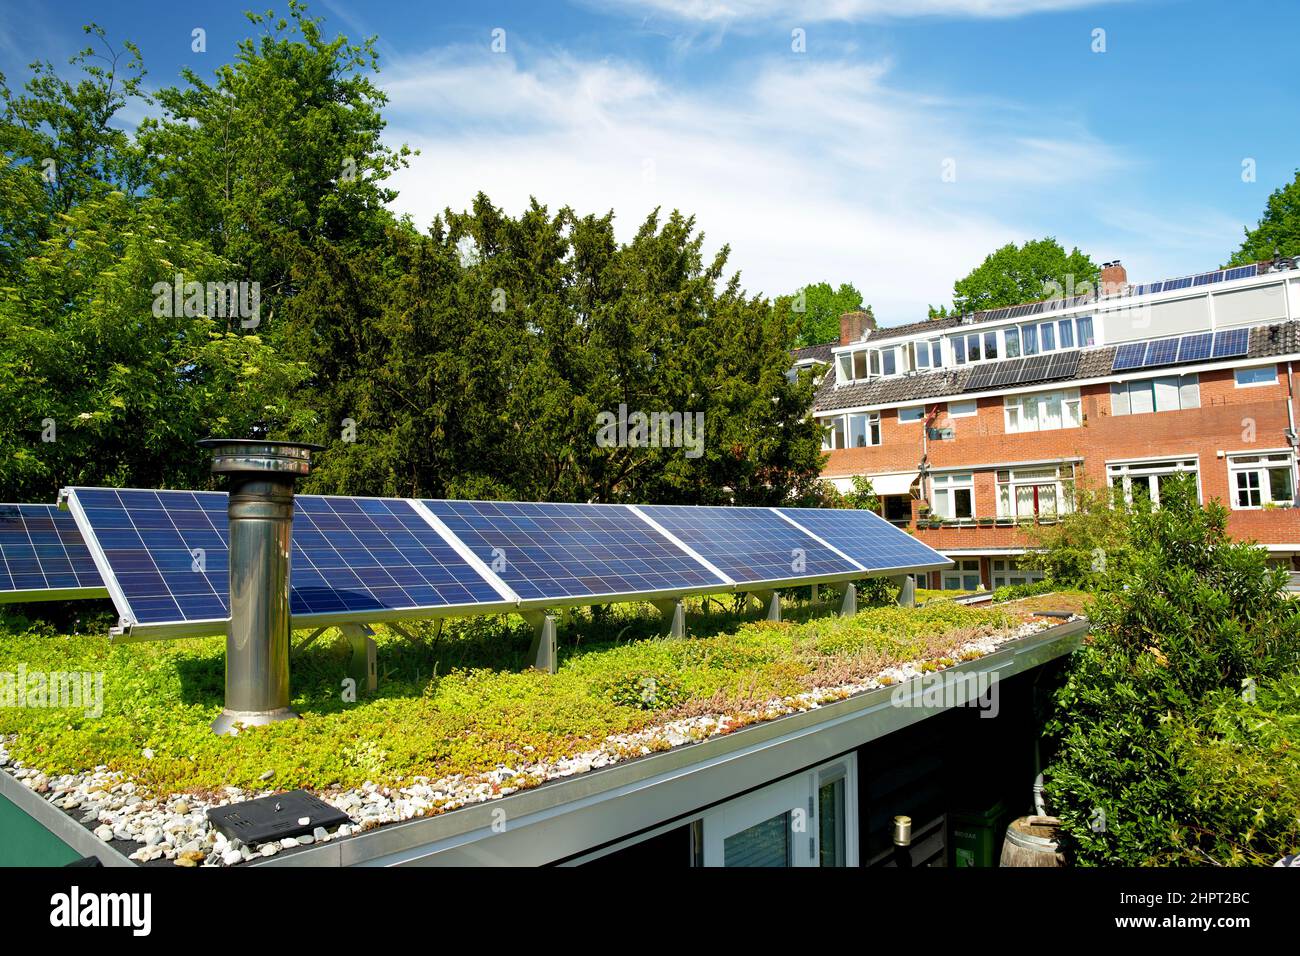 Solar panels on a green rooftop garden with flowering sedum plants Stock Photo